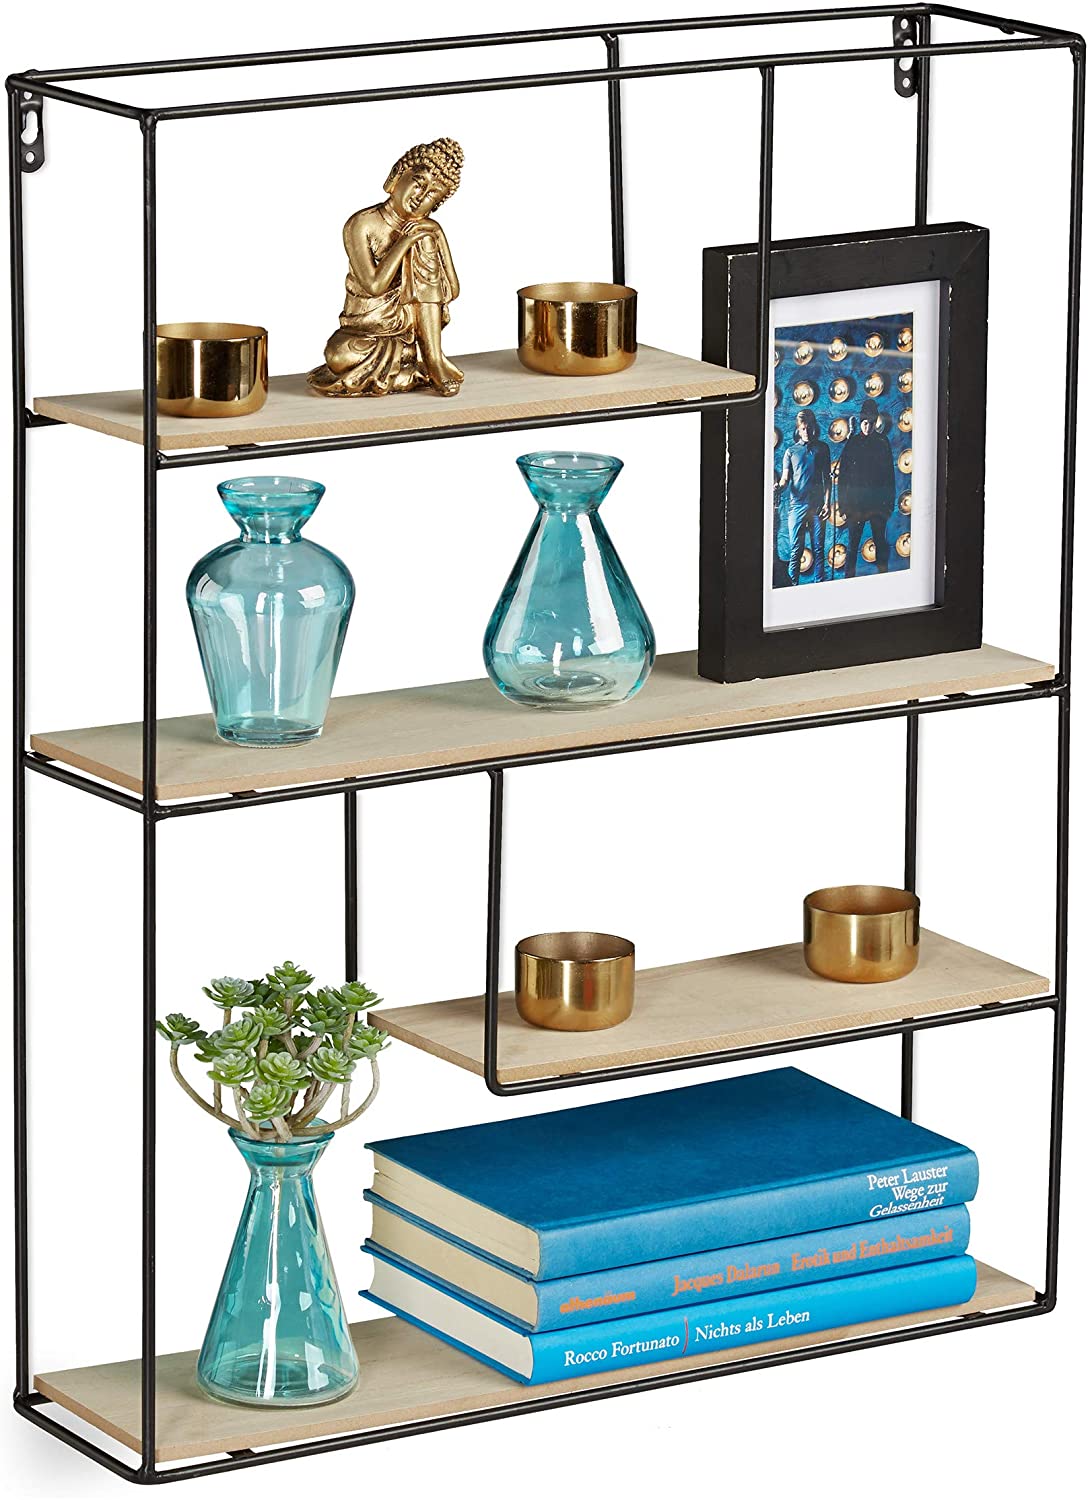 Relaxdays Metal Wall Shelf, 4 Shelves, Wood Effect, Industrial Retro Design